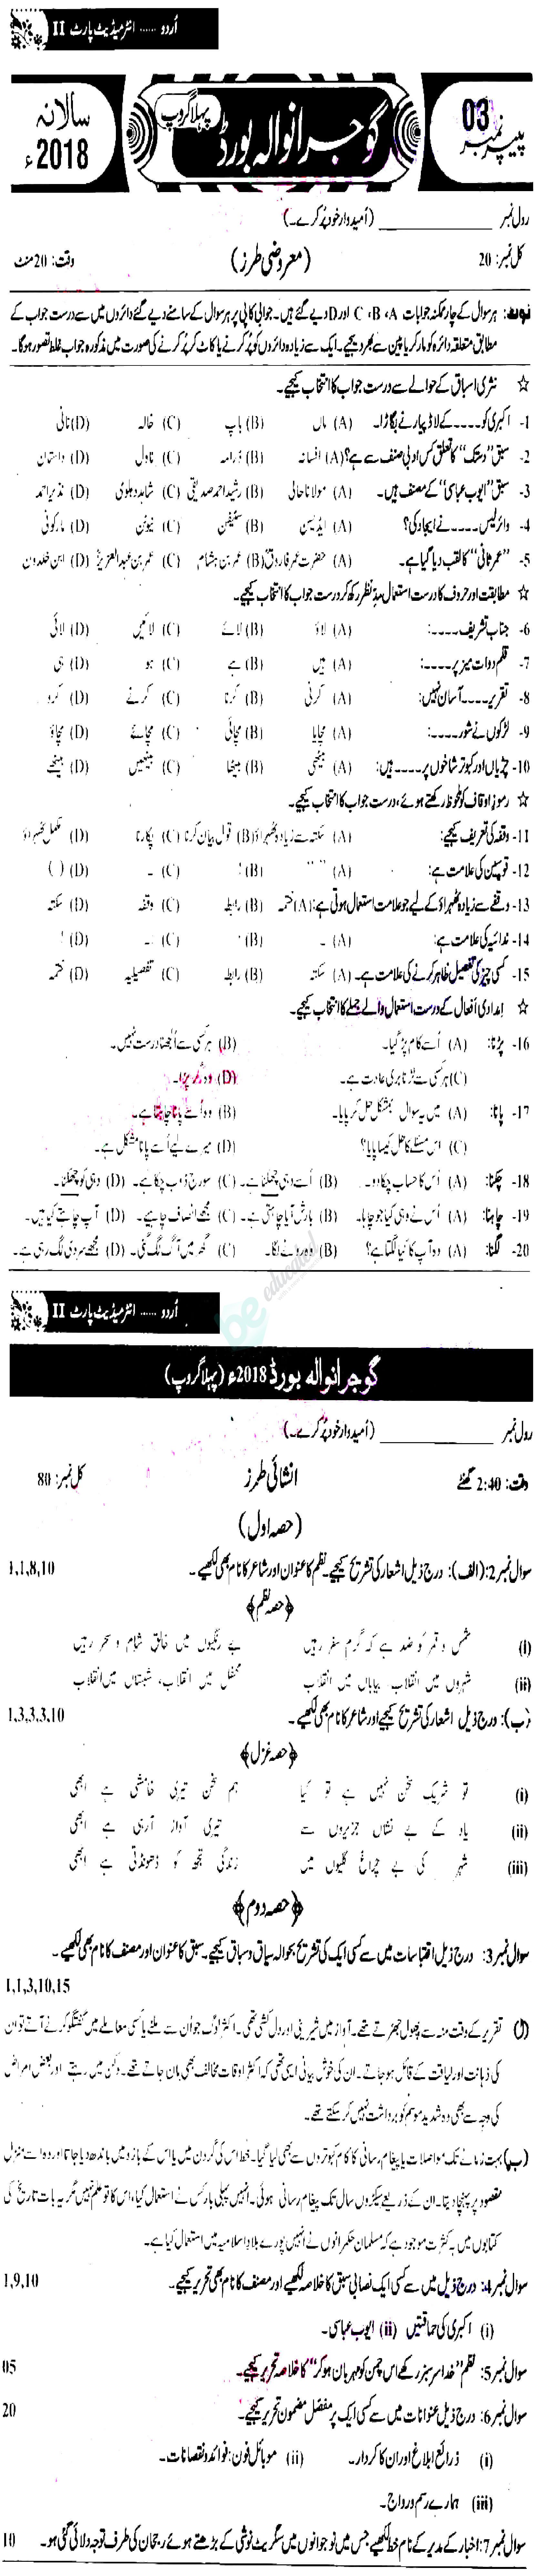 Urdu 12th class Past Paper Group 1 BISE Gujranwala 2018